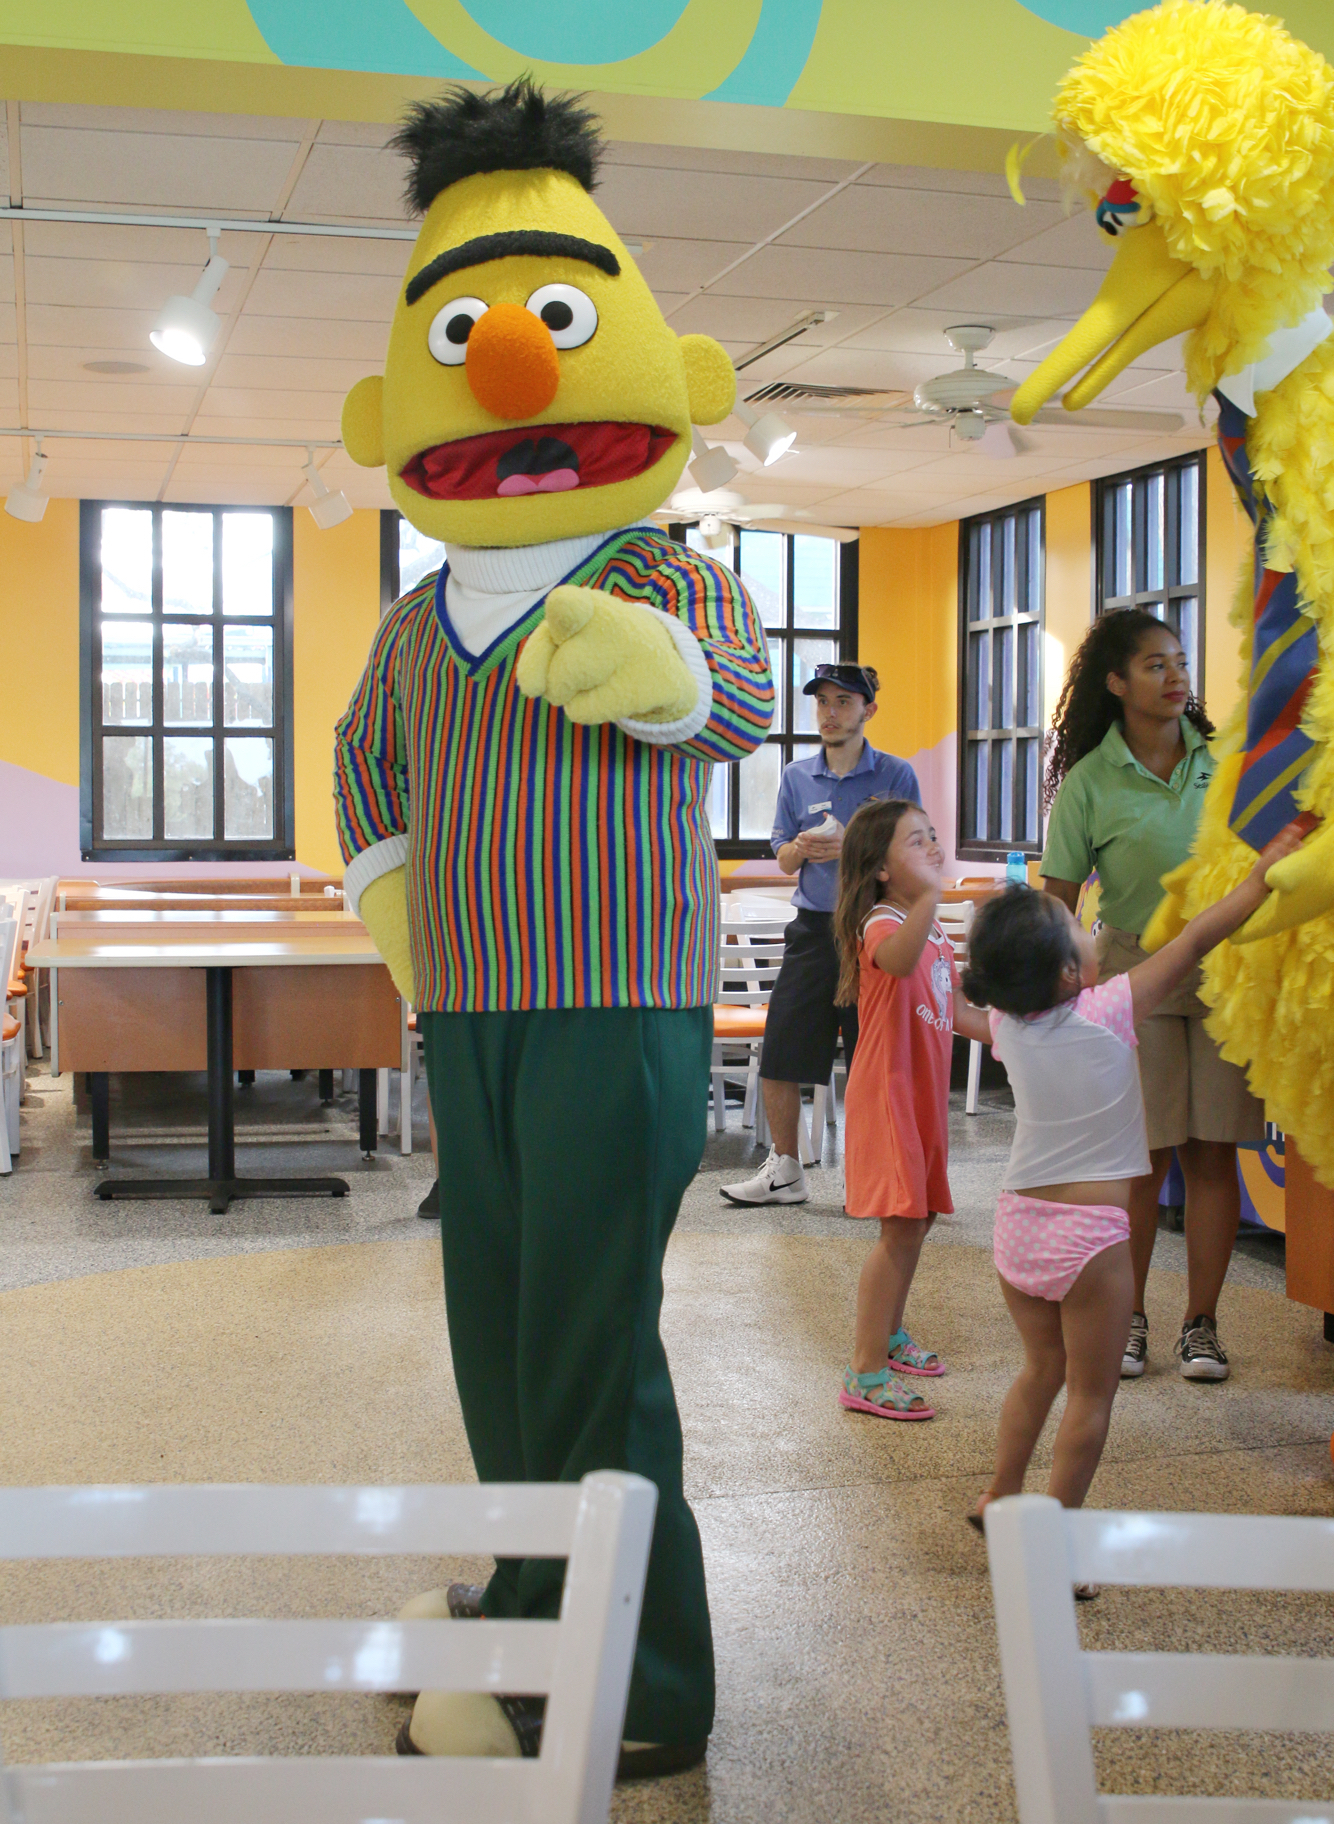 Bert meeting guests at Sesame Street dinner